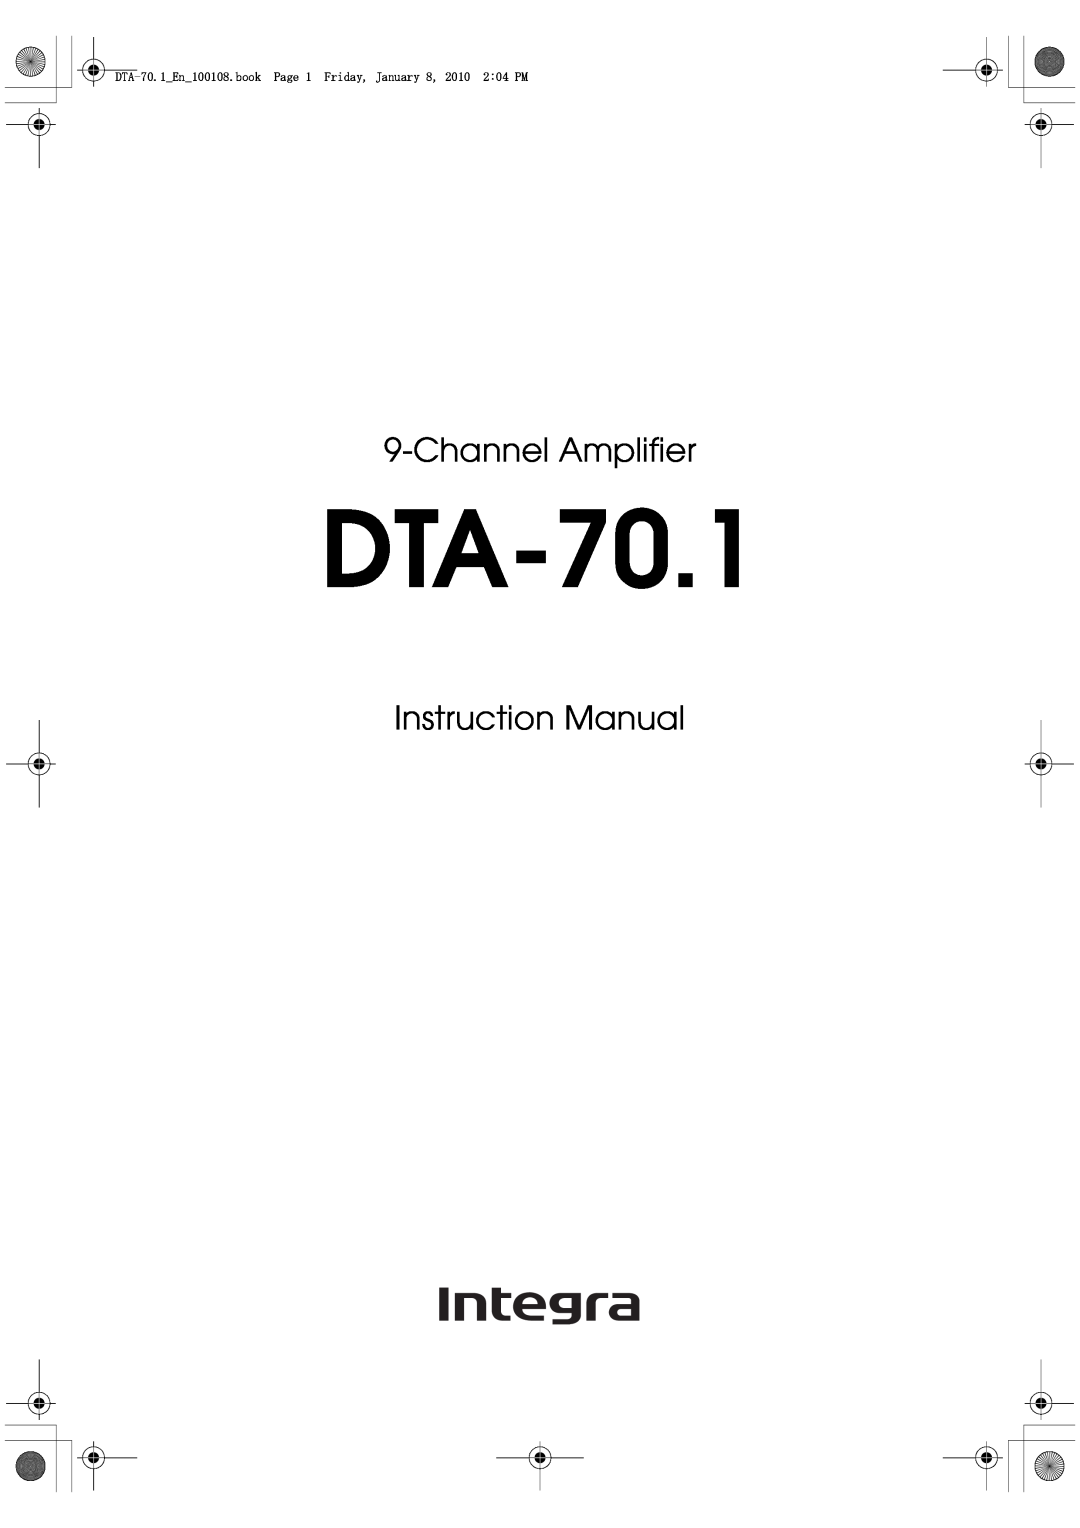 Integra DTA-70.1 instruction manual ChannelAmplifier 